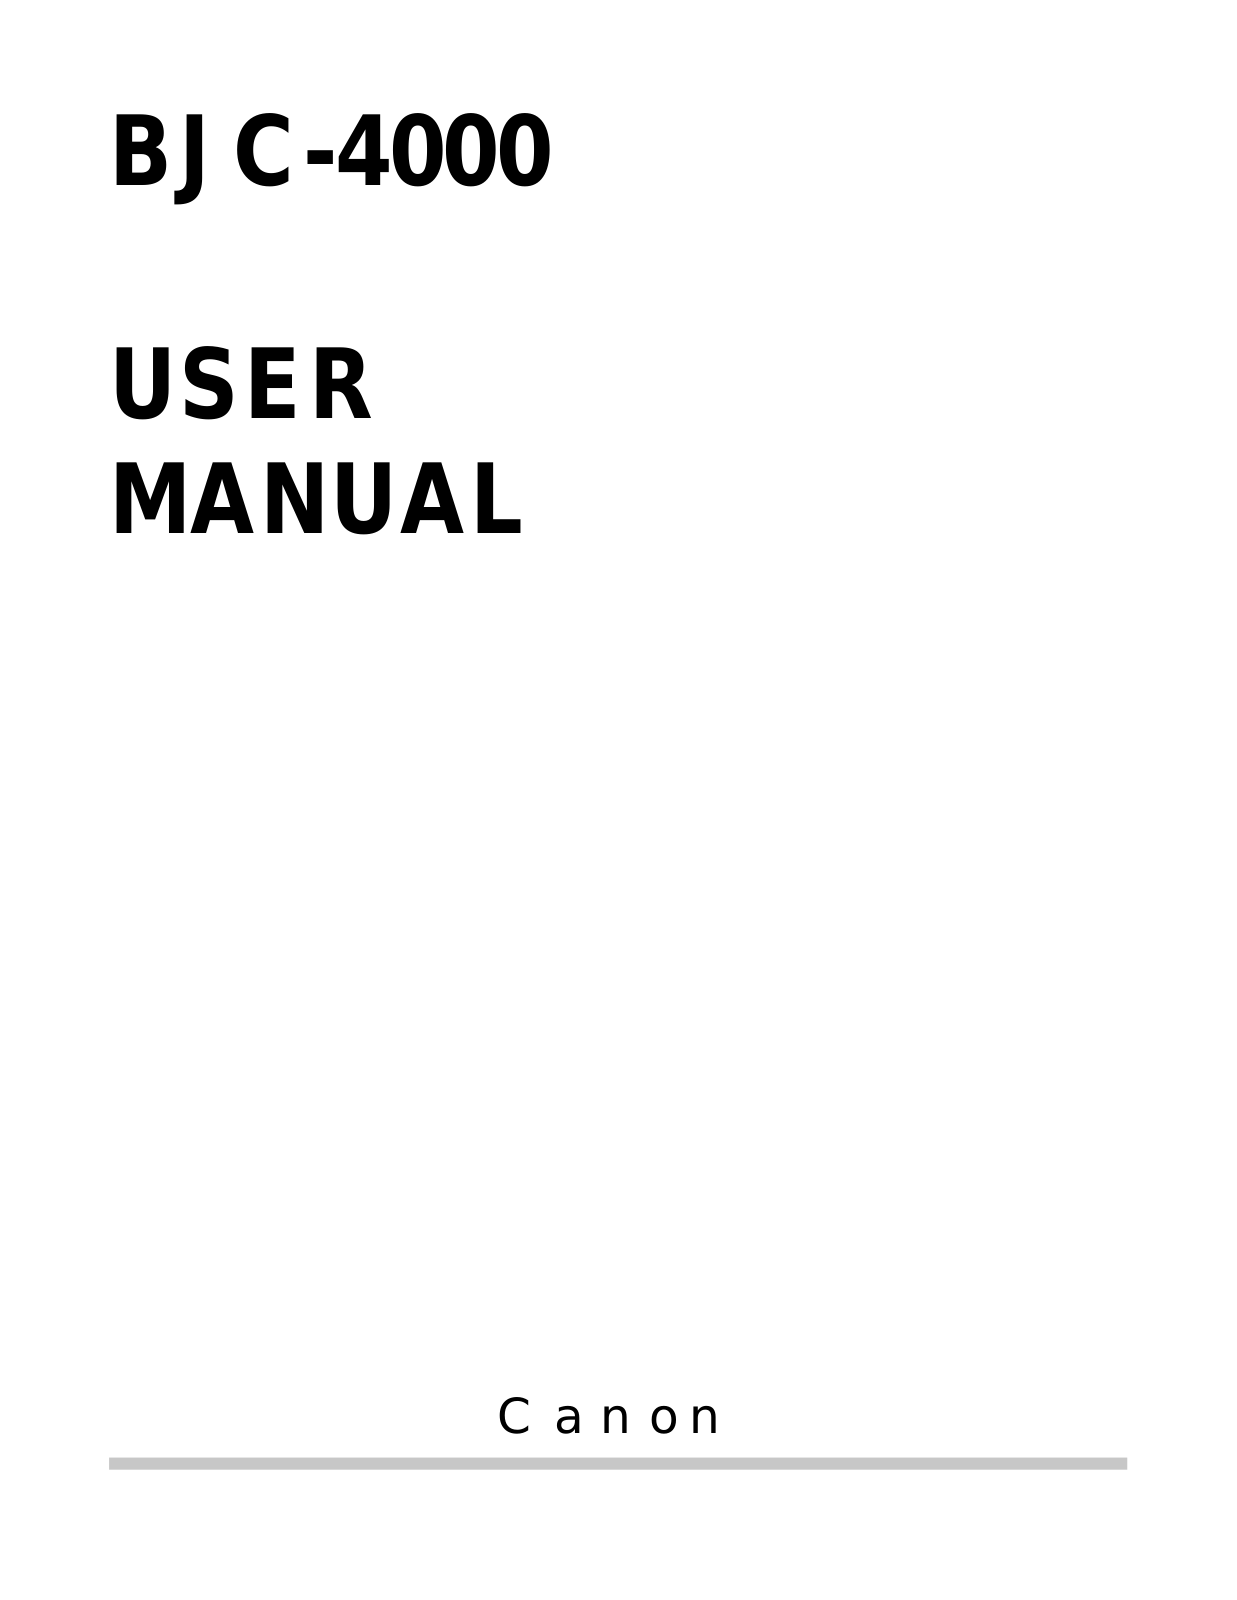 Canon BJC-4000 User Manual